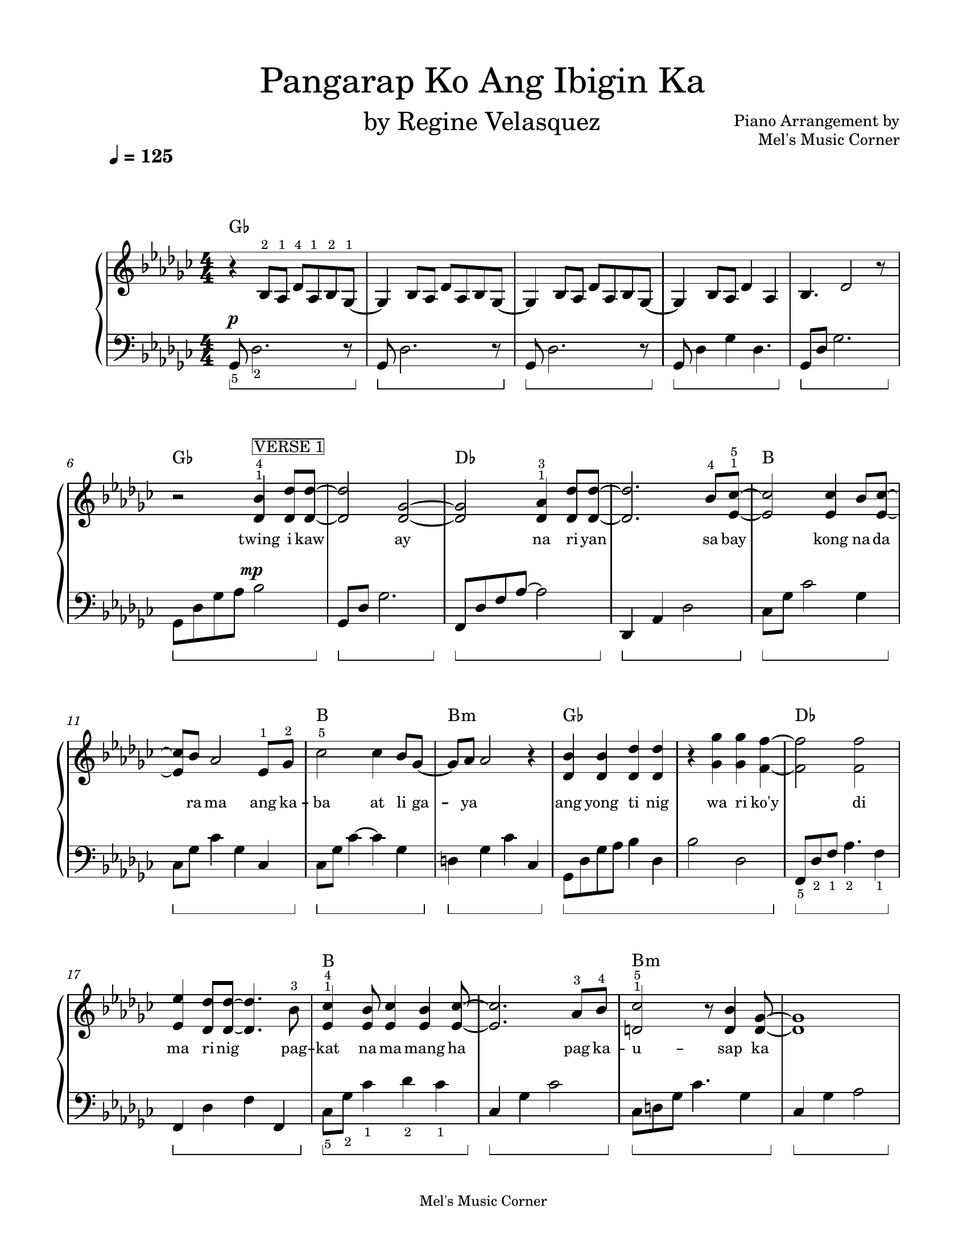 Regine Velasquez - Pangarap Ko Ang Ibigin Ka (piano sheet music) by Mel's Music Corner